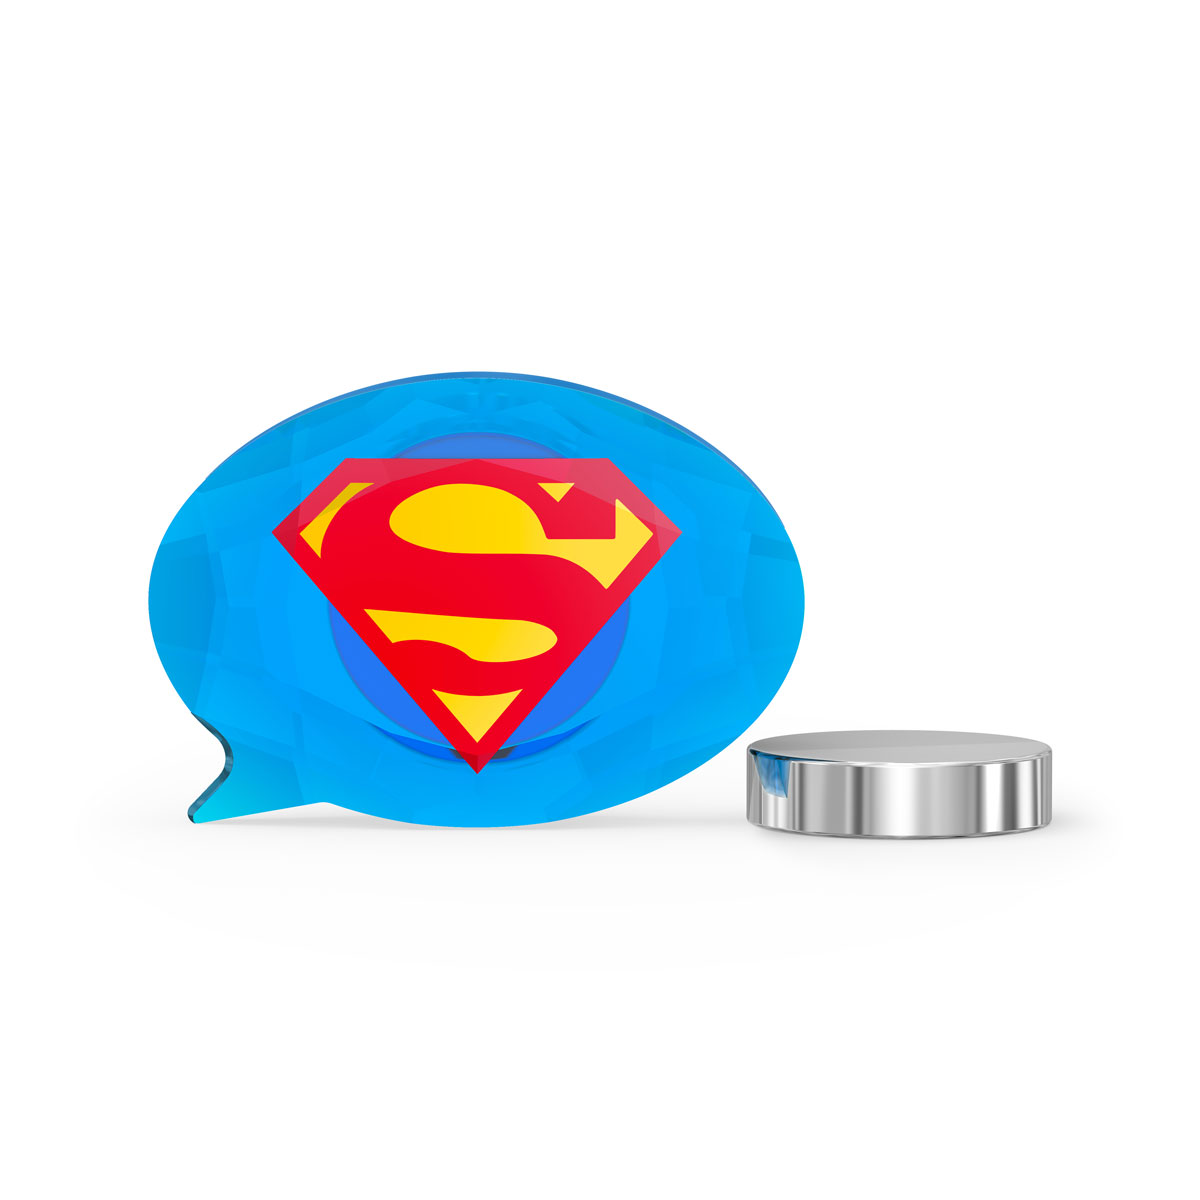 Swarovski Warner Bros. DC Comics Magnet Superman Logo